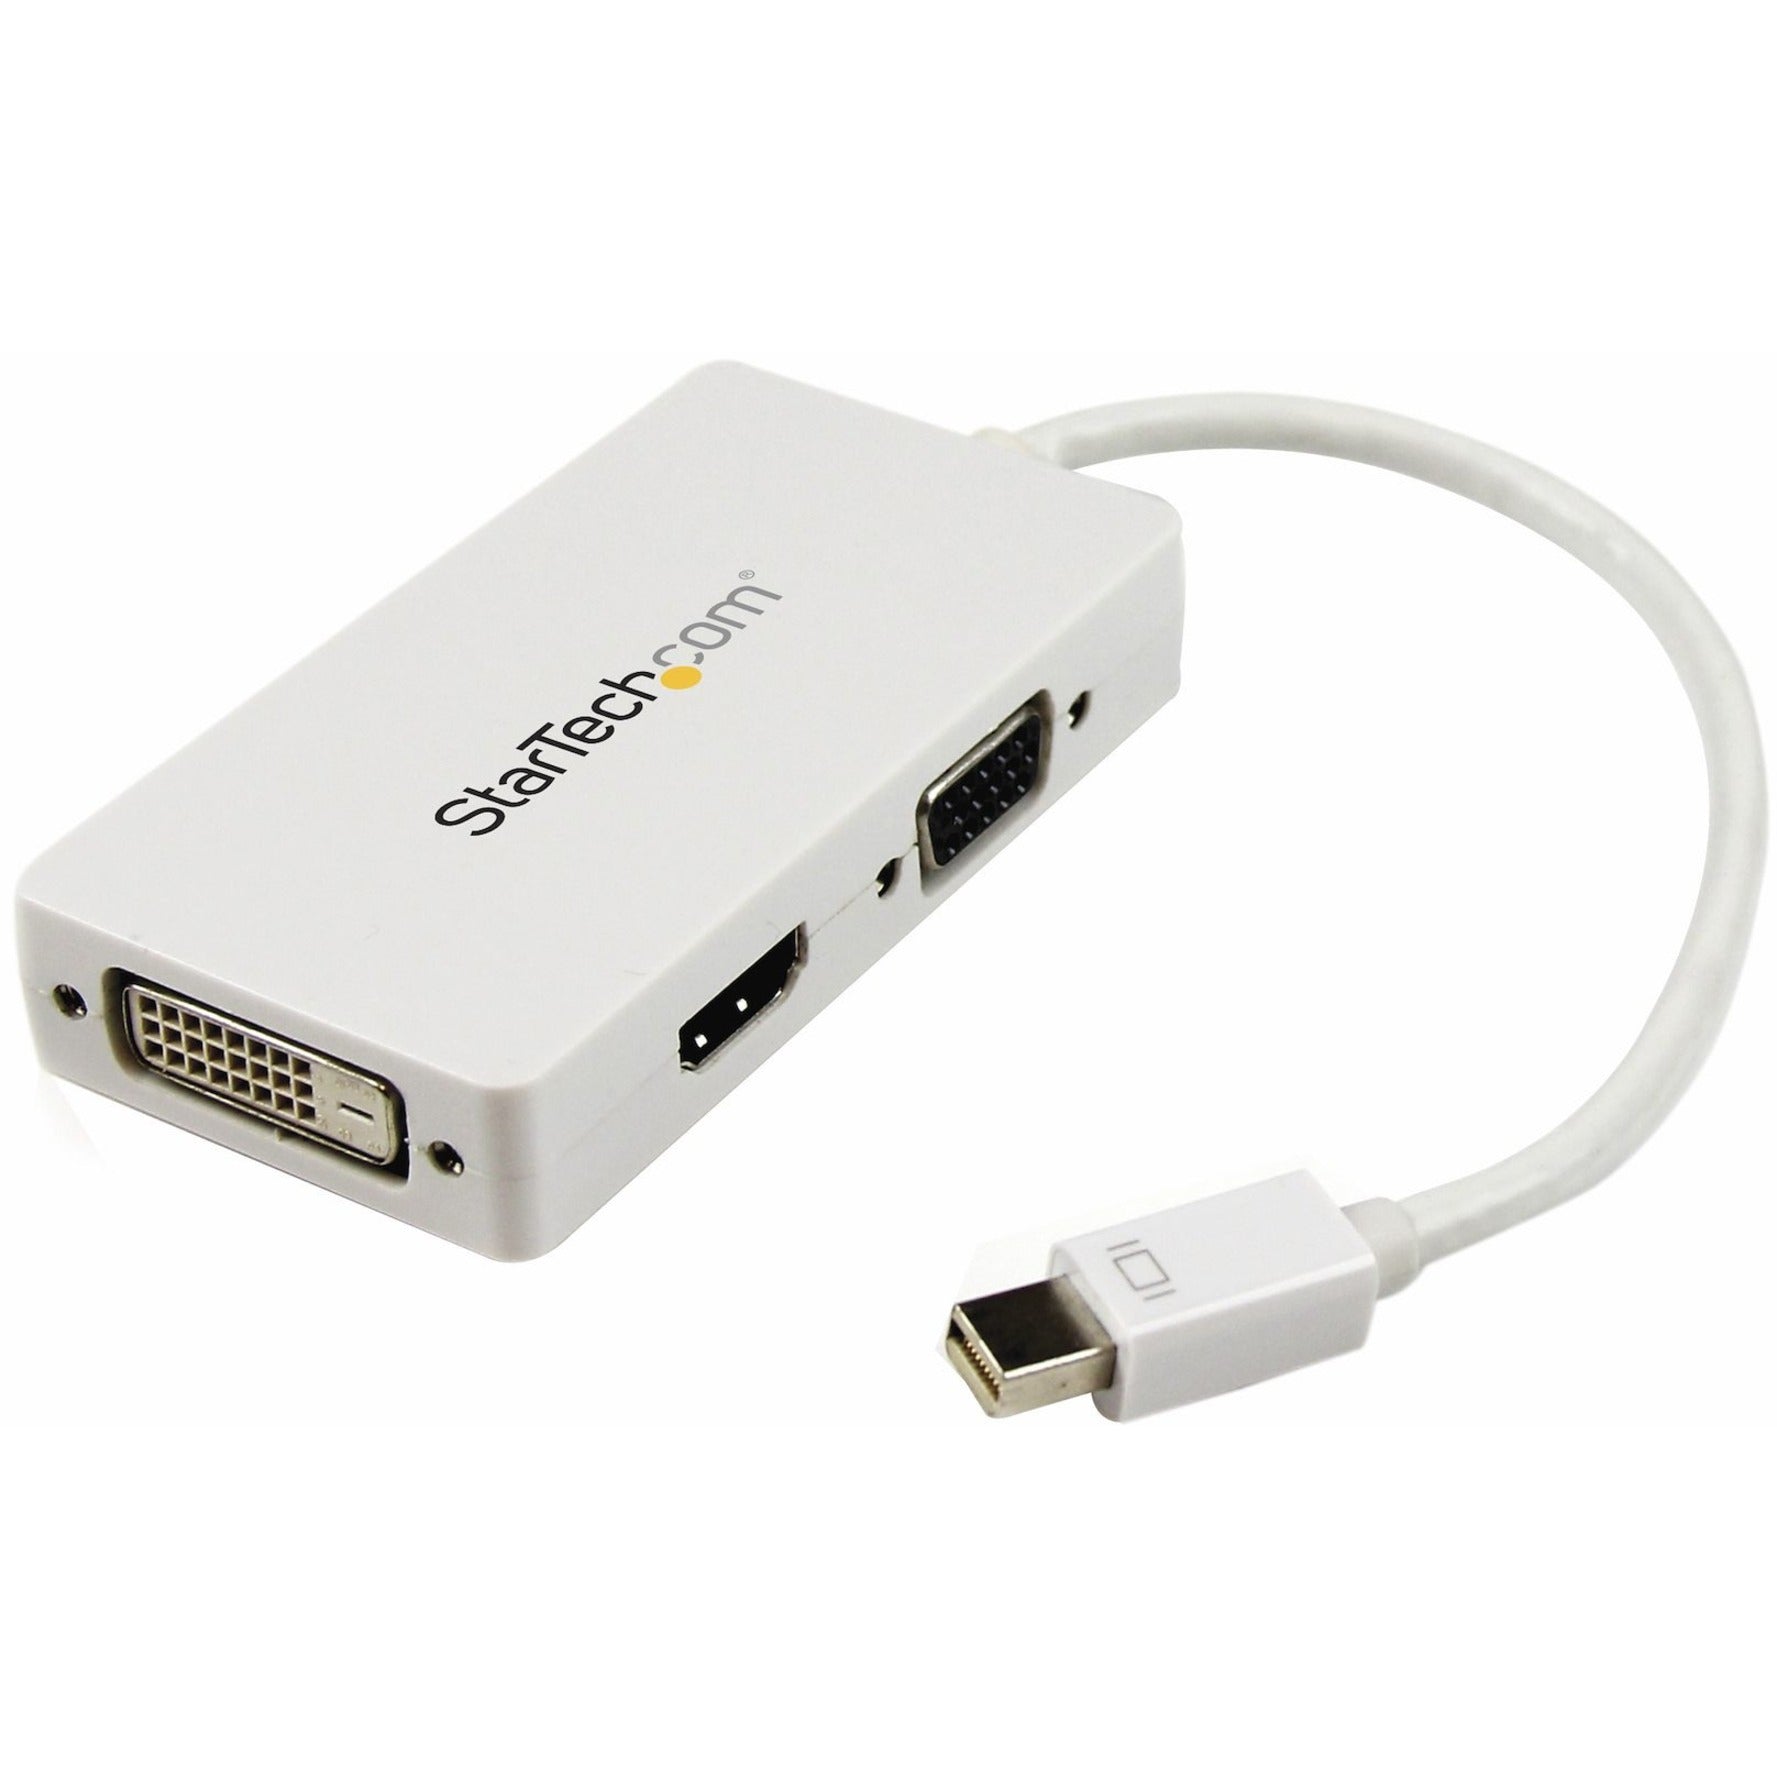 StarTech.com MDP2VGDVHDW Travel A/V Adapter: 3-in-1 Mini DisplayPort to VGA DVI or HDMI Converter, White